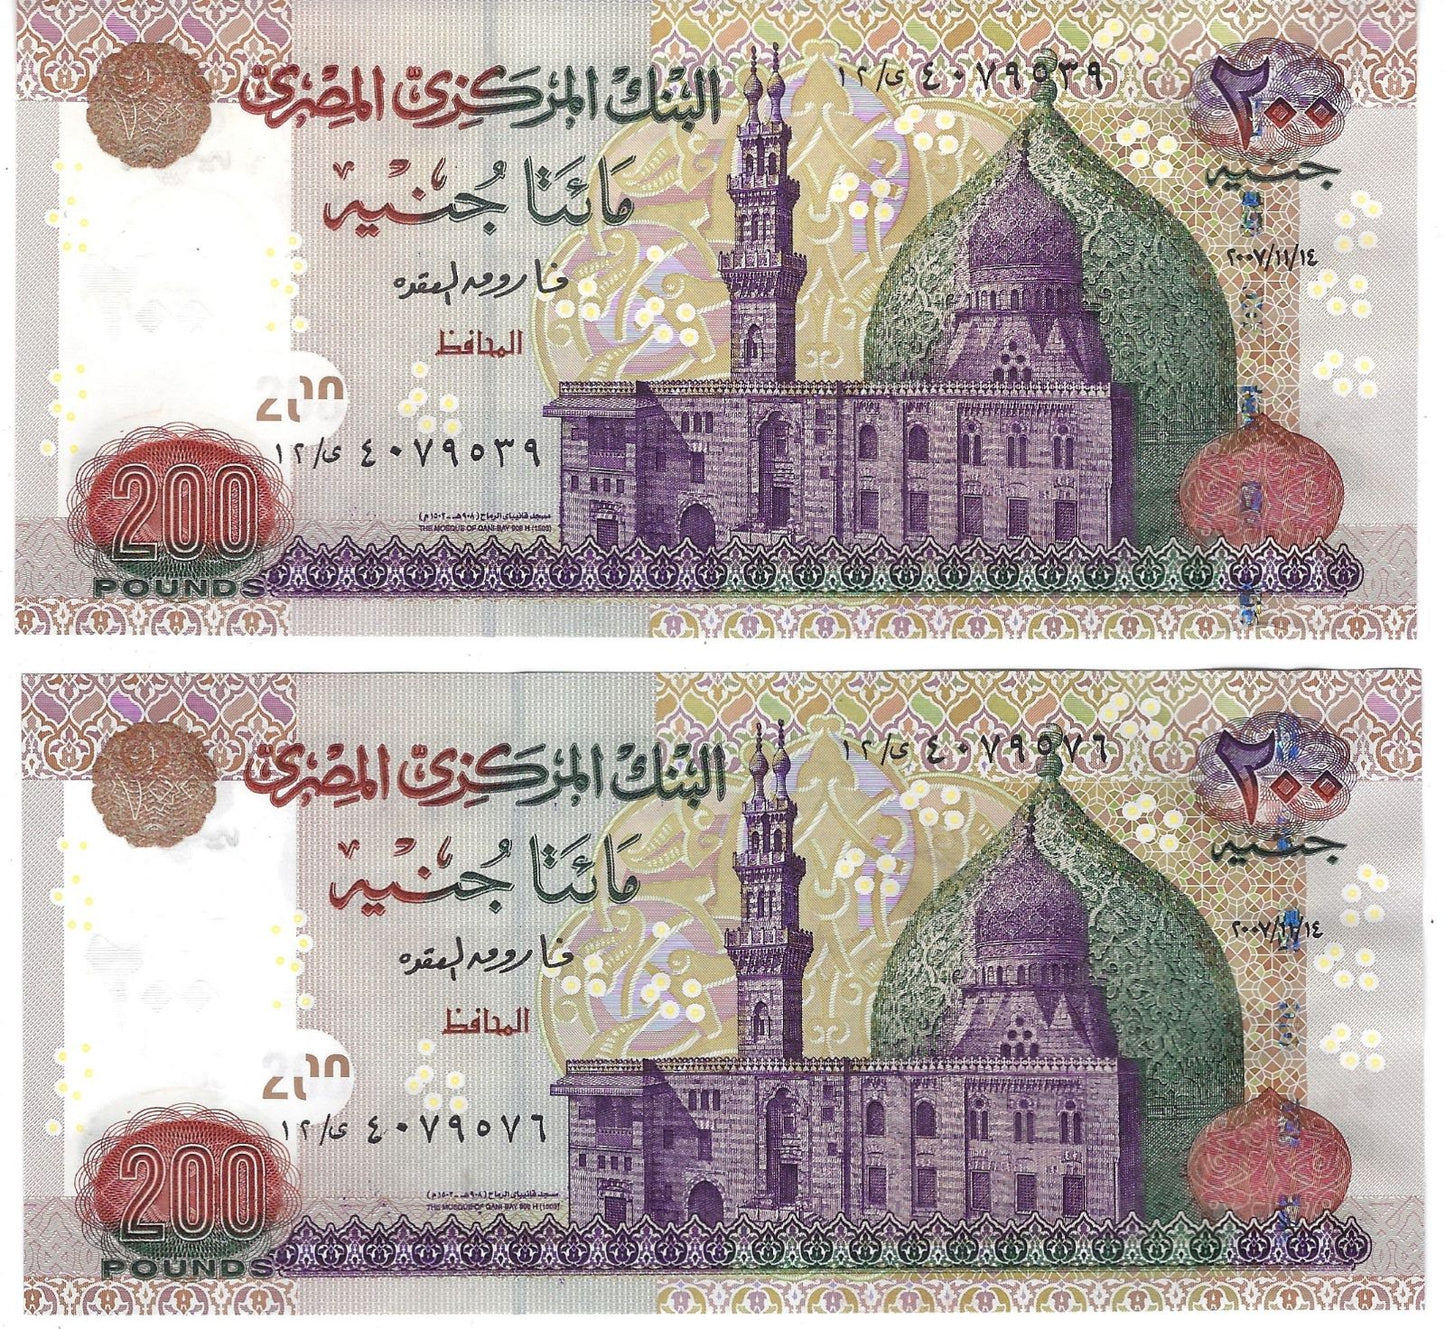 Egypt 200 Pound Large & Small 14.11.2007 & 13/1/2009 Worth $90 .EG1K